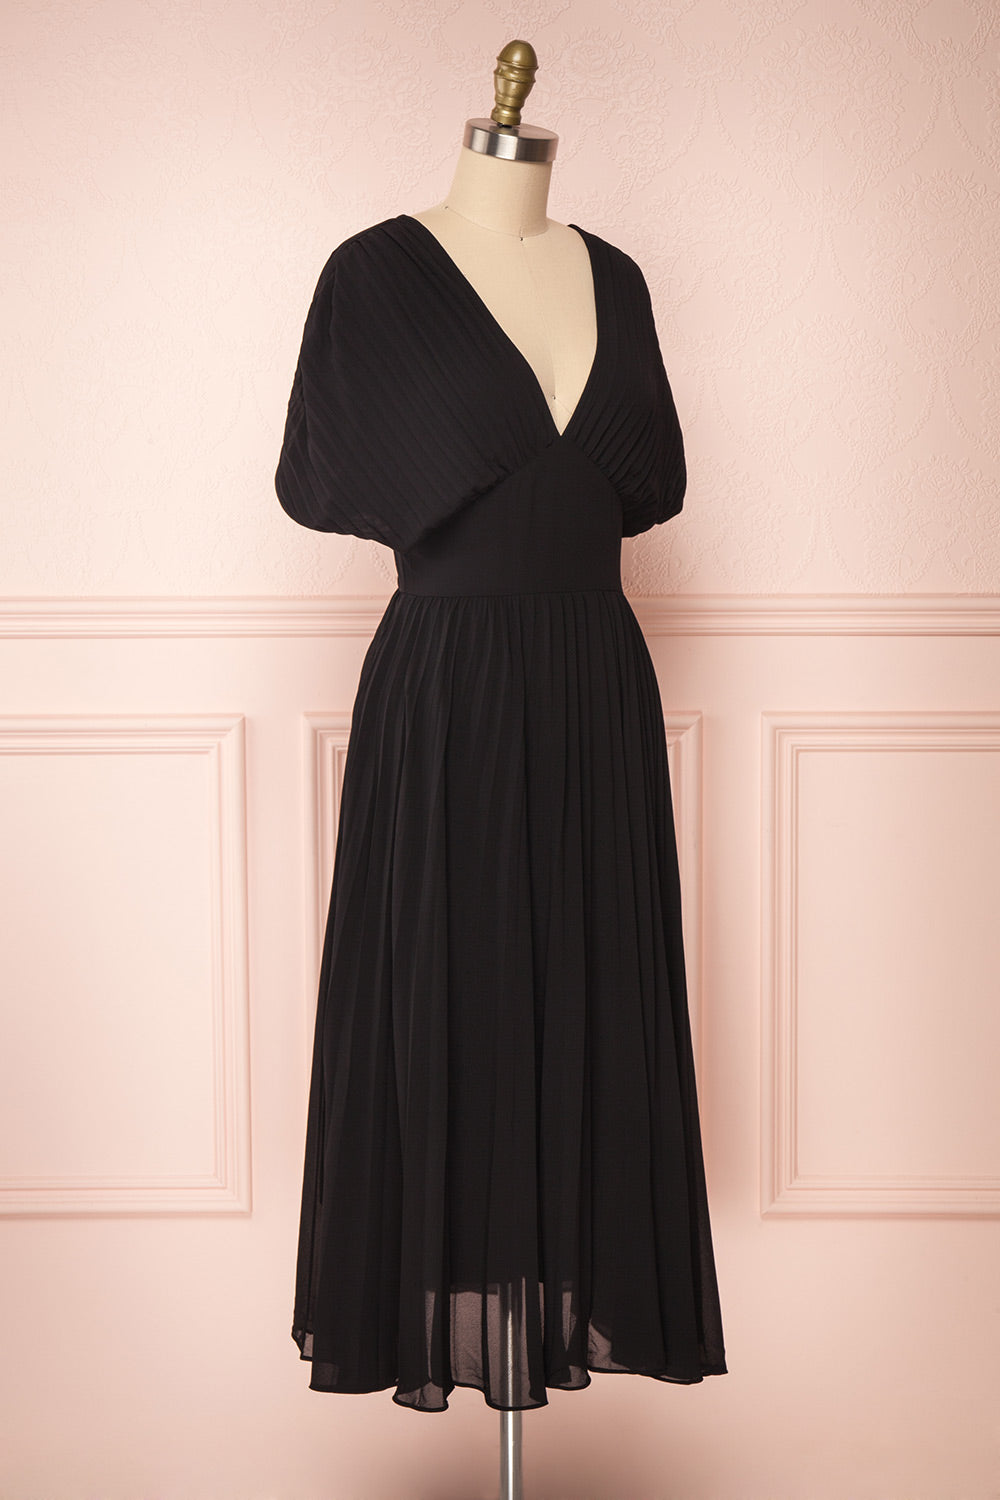 Alisha Onyx Black Pleated A-Line Midi Dress | Boutique 1861 side view